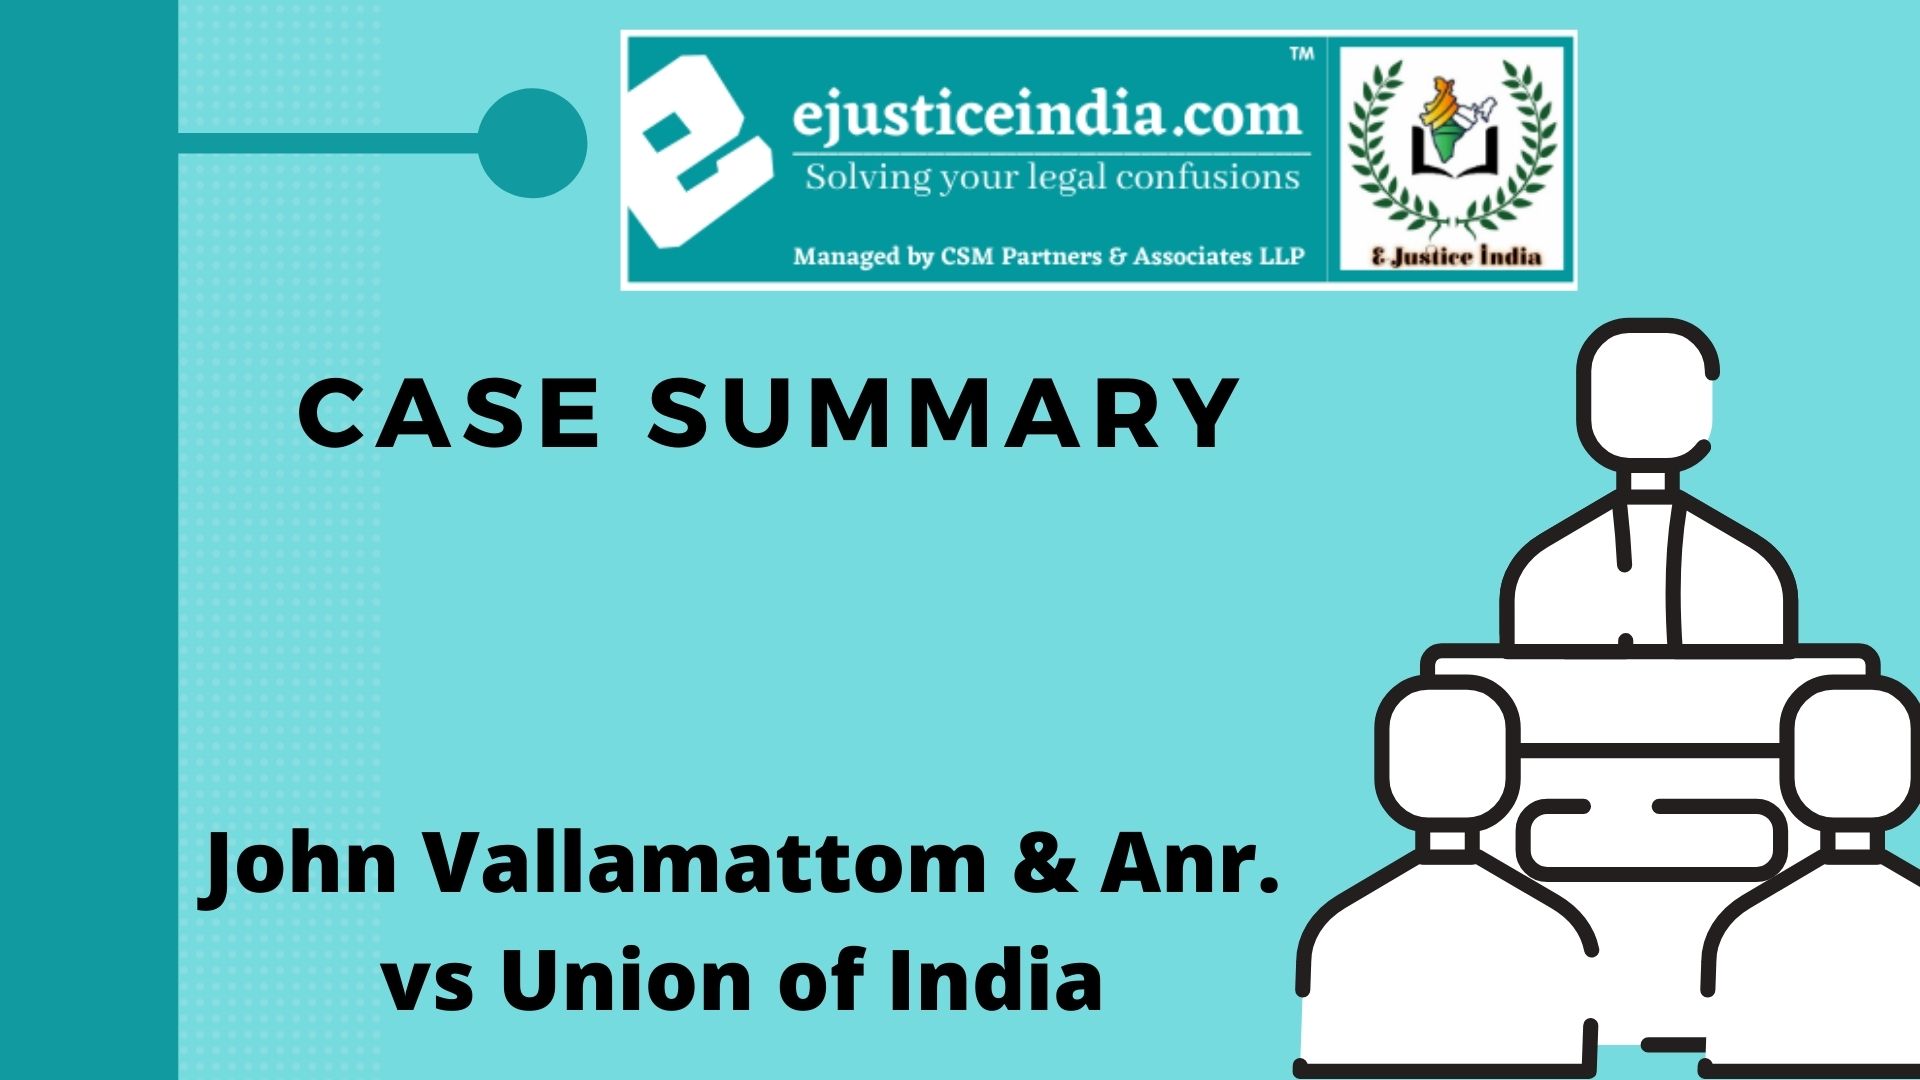 John Vallamattom & Anr. vs Union of India